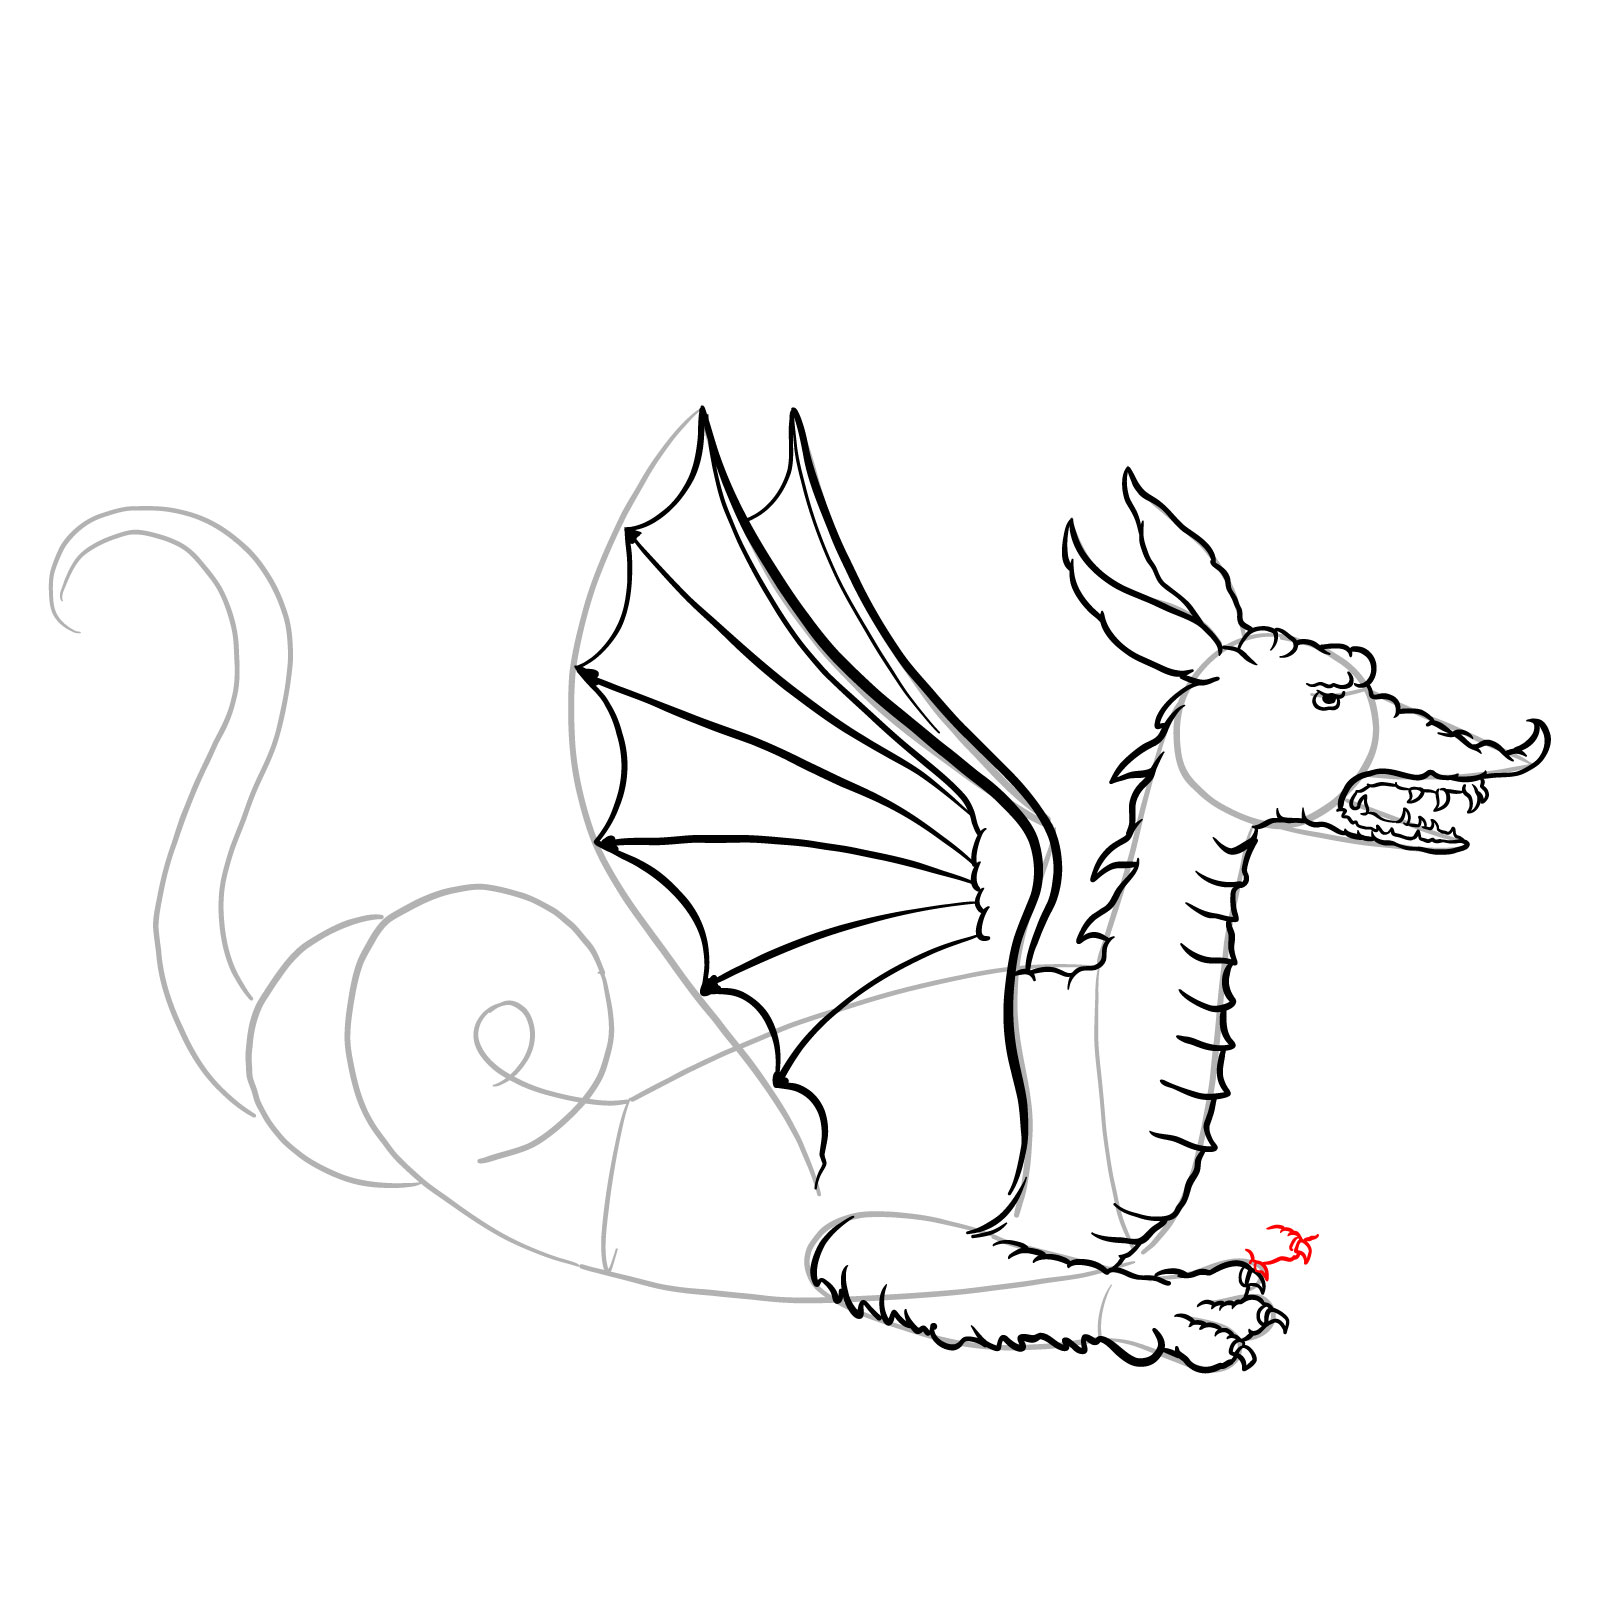 How to draw a Knucker dragon - step 23